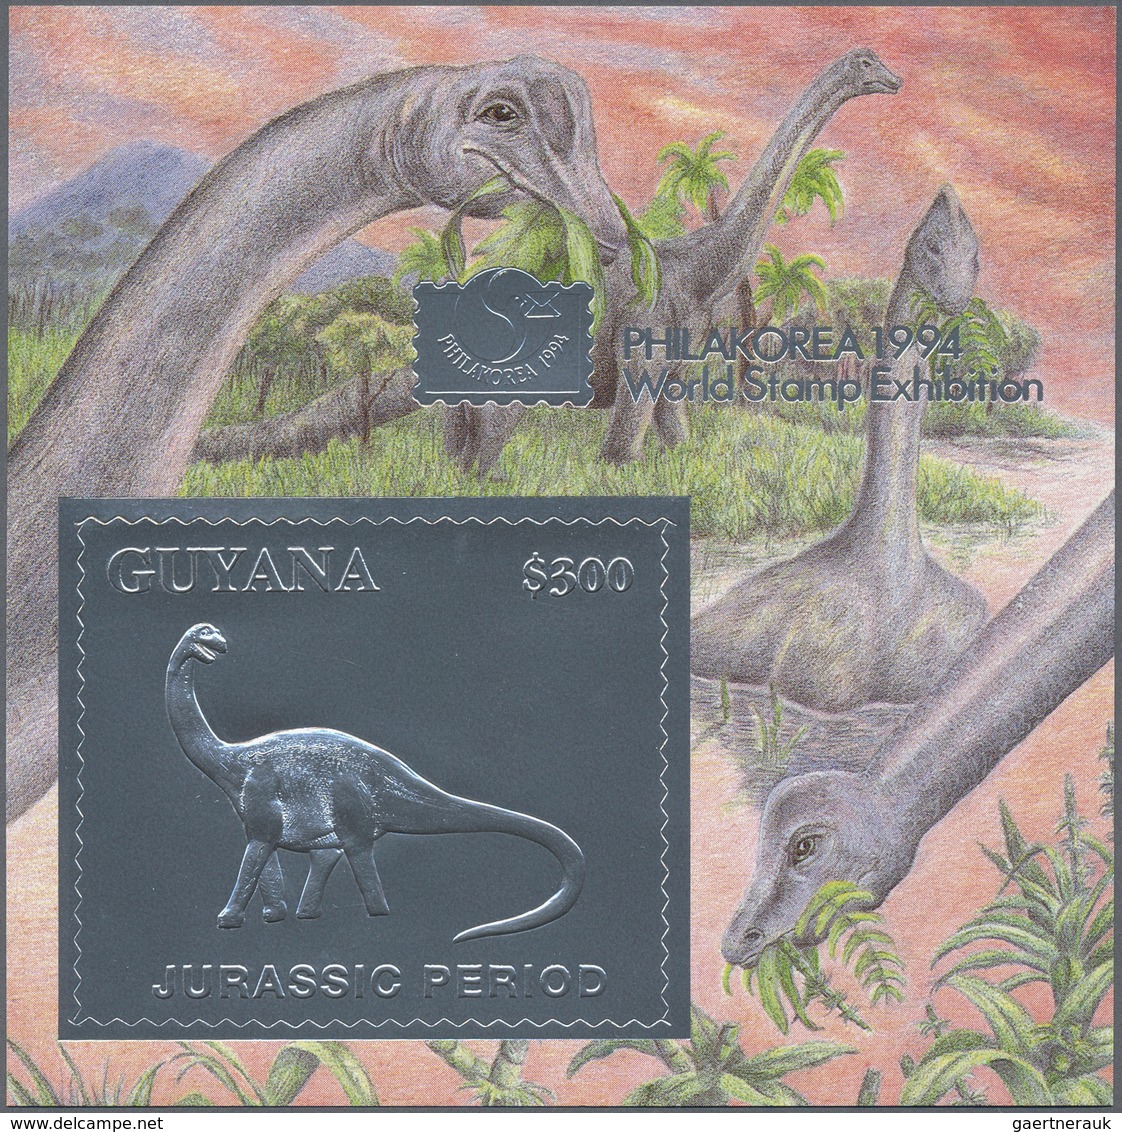 ** Thematik: Tiere-Dinosaurier / Animals-dinosaur: 1994, International Stamp Exhibition Philakorea '94 - Préhistoriques